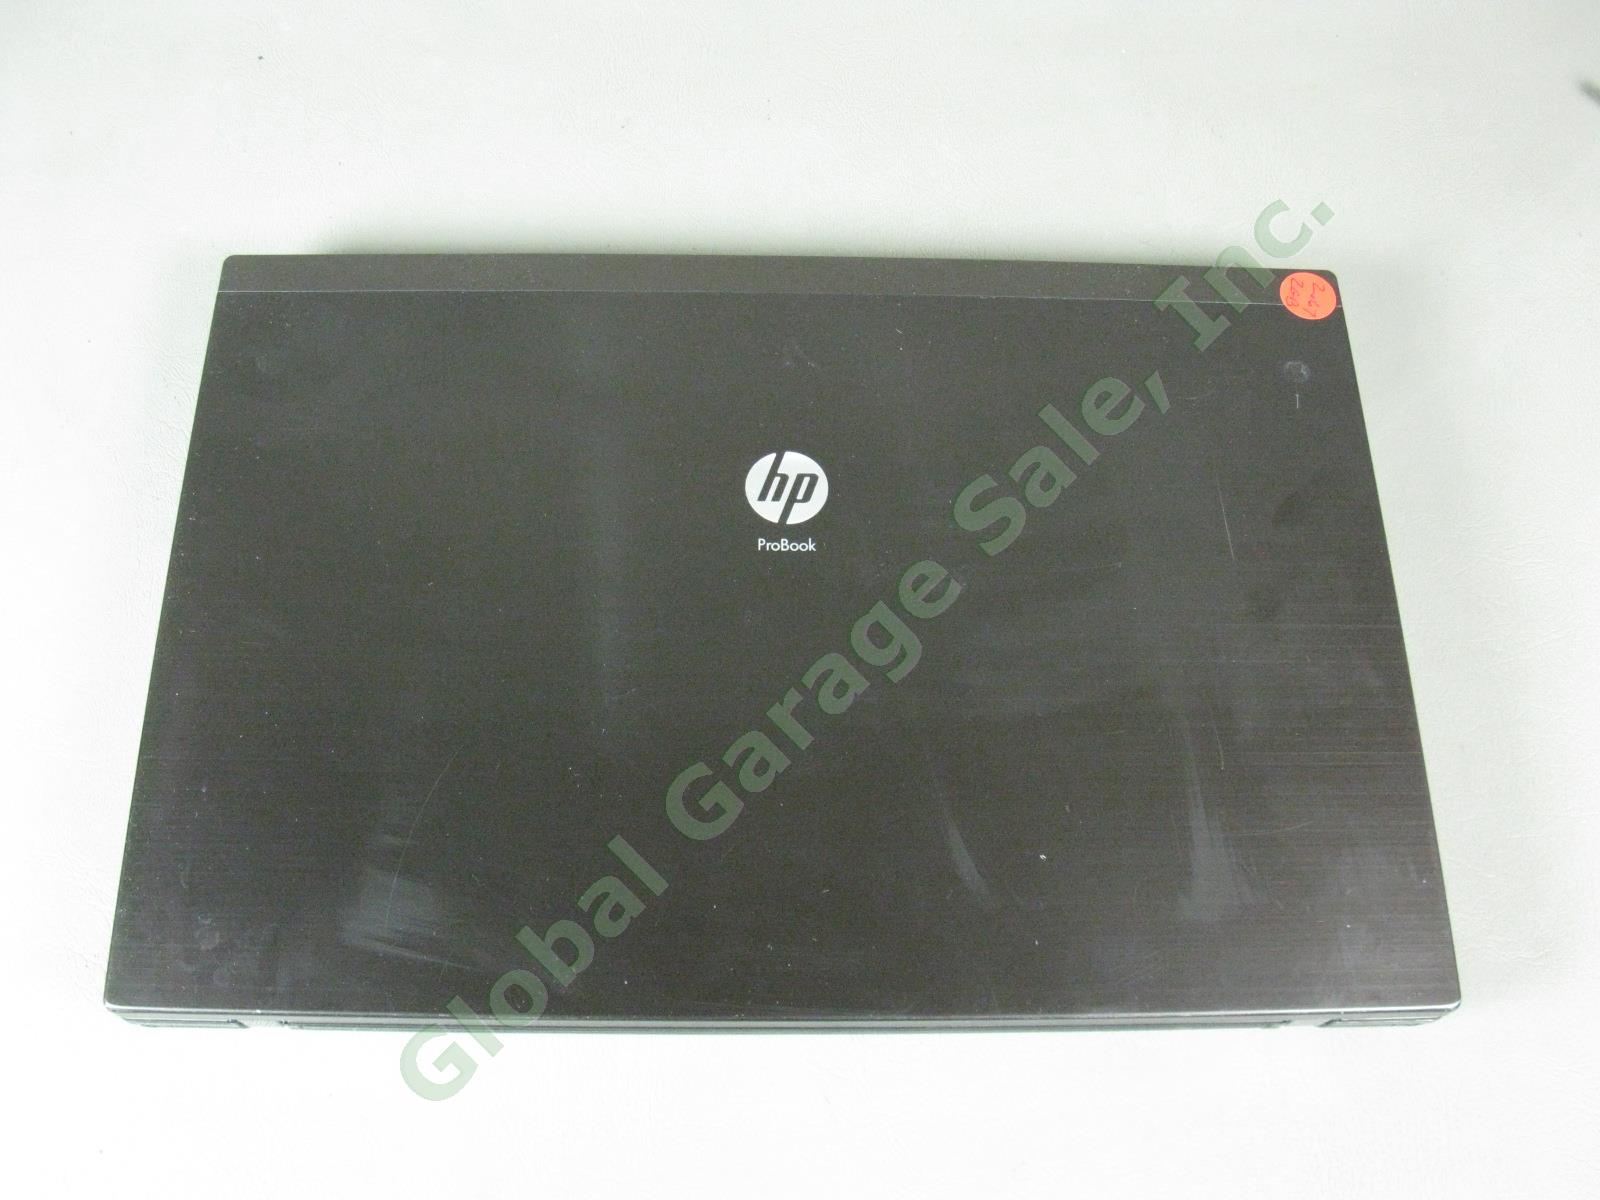 HP 4520s ProBook Laptop Computer Intel Core i5 M540 2.67GHz 2GB Windows 7 Pro NR 3